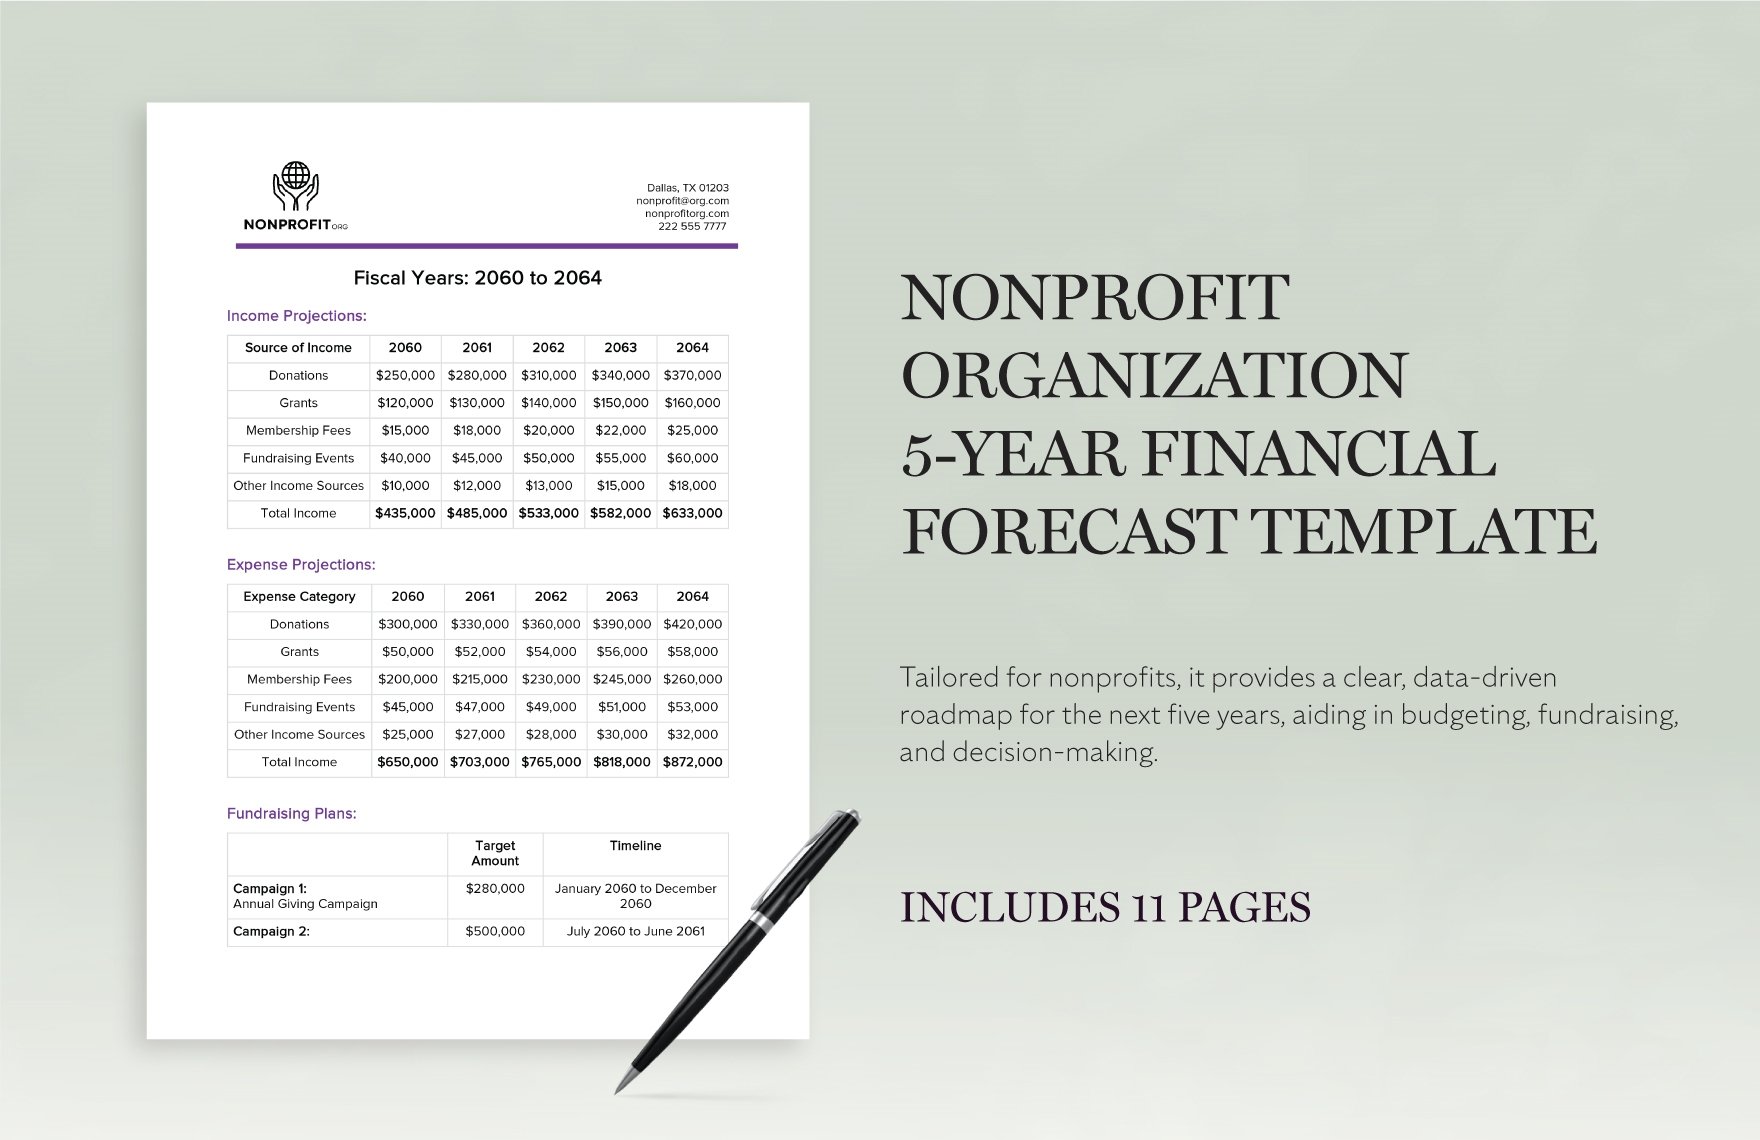 Nonprofit Organization 5-Year Financial Forecast Template in Word, Google Docs, PDF